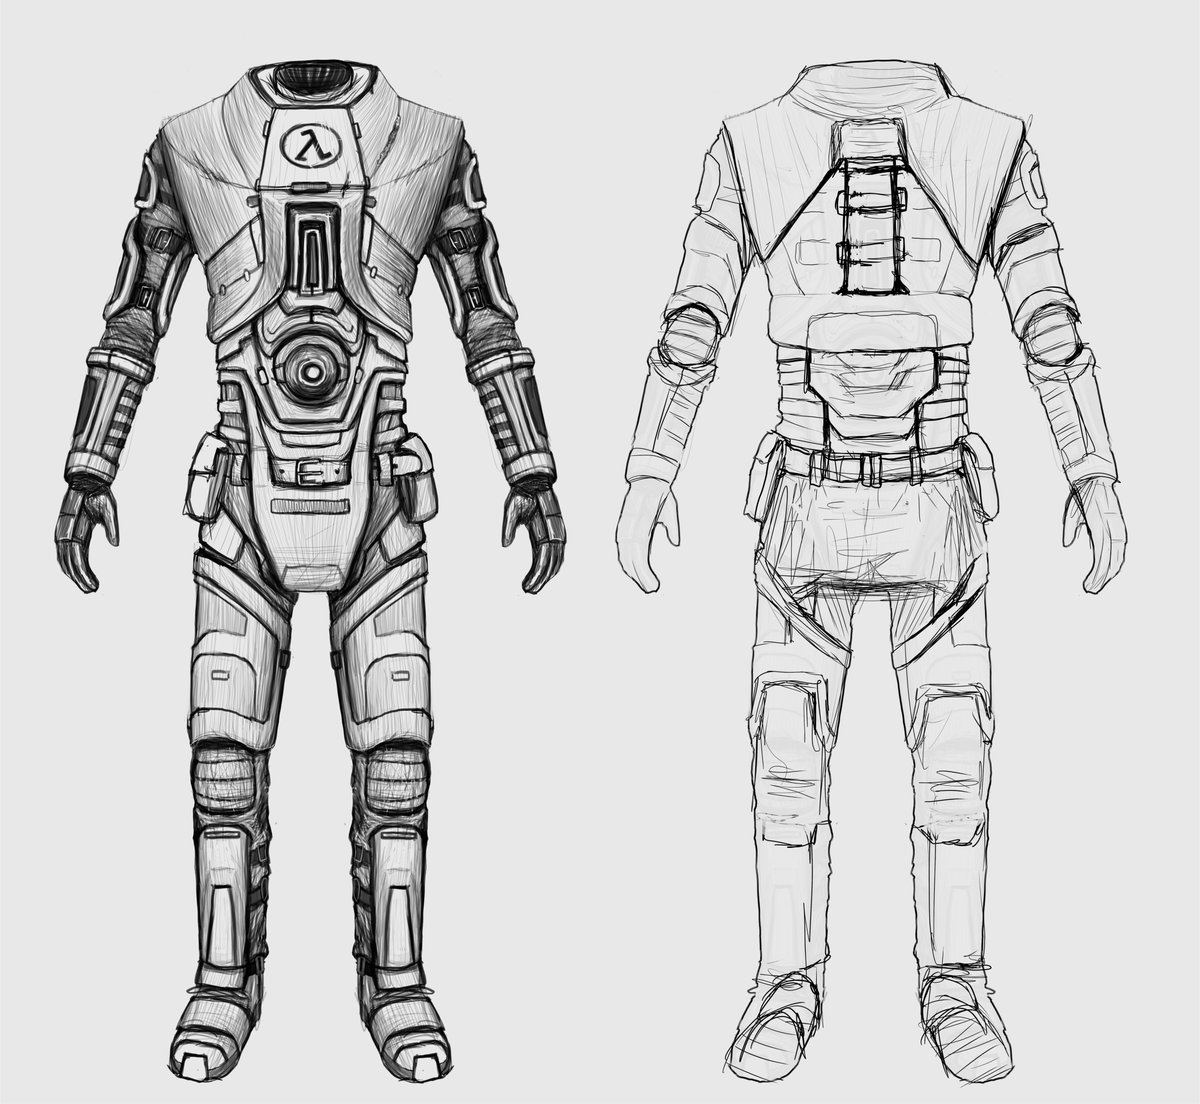 Continuing on my Half Life 2 beta suit design, I am just starting working on the back #hl2 #HalfLife2Beta #HalfLife2 #conceptart